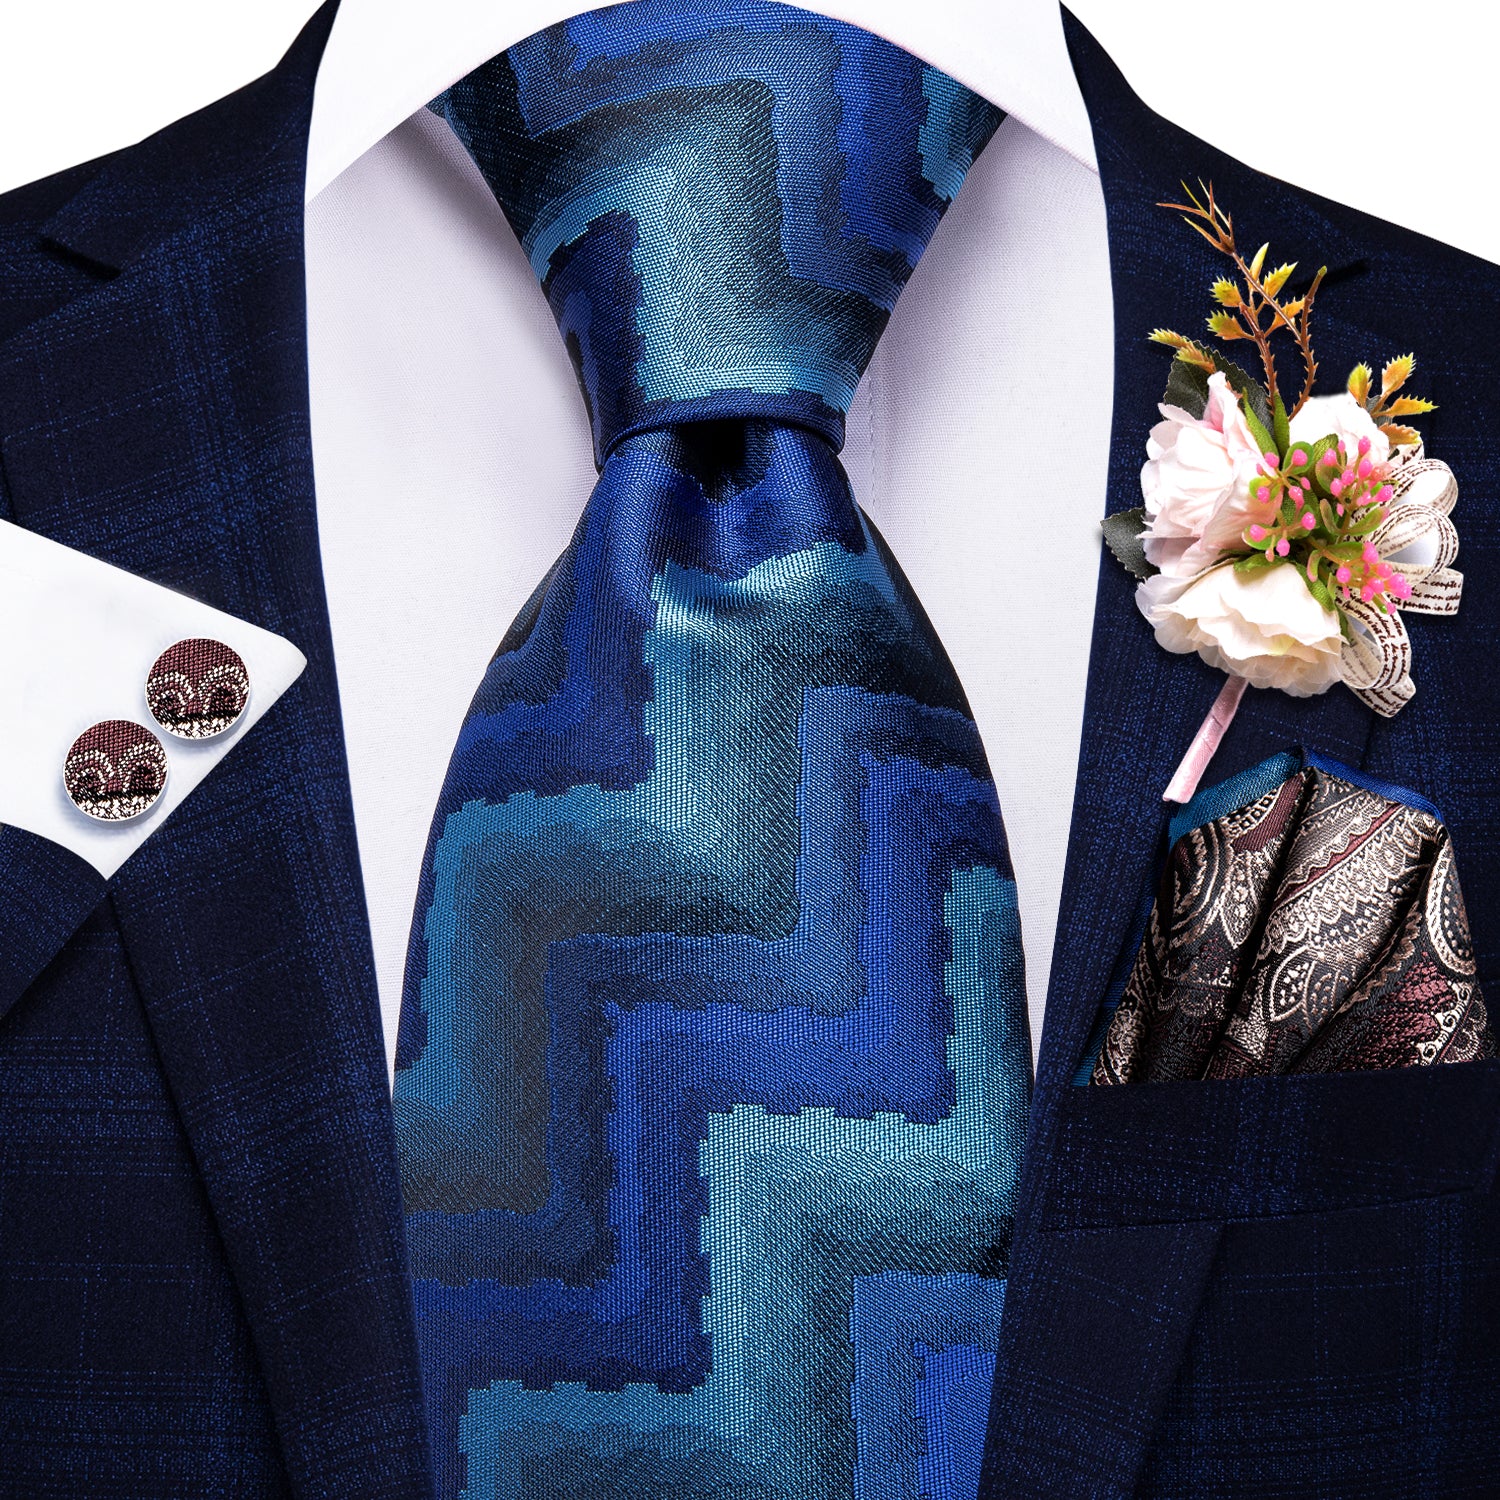 Blue Striped Novelty Tie Pocket Square Cufflinks Set with Wedding Brooch